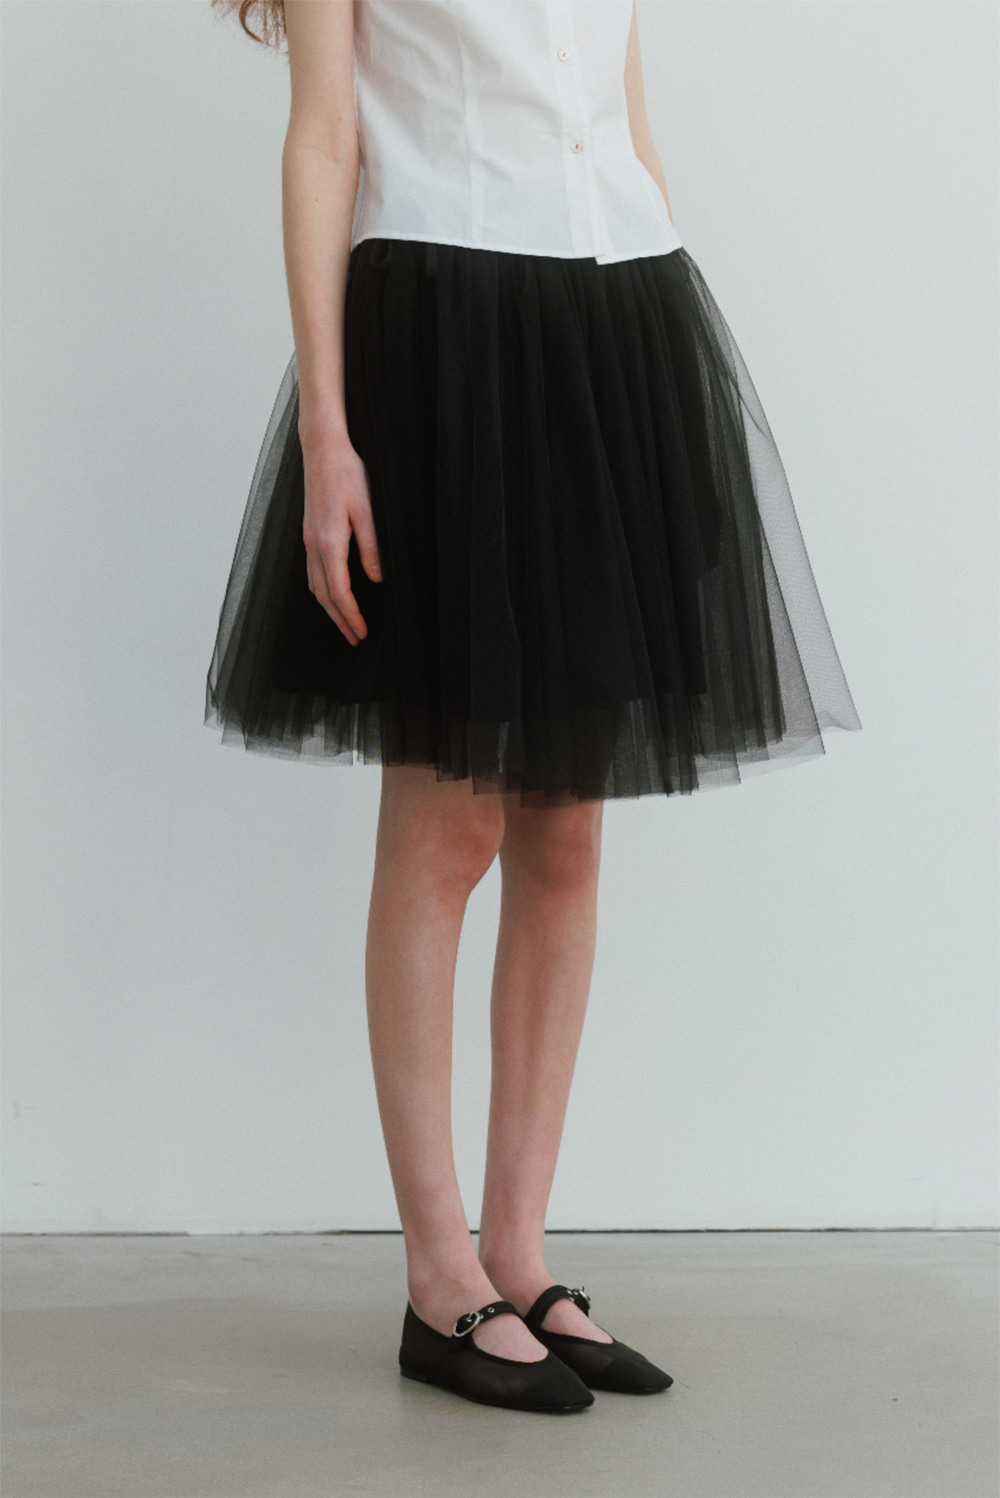 [REORDER] Girls Tutu Skirt in Black